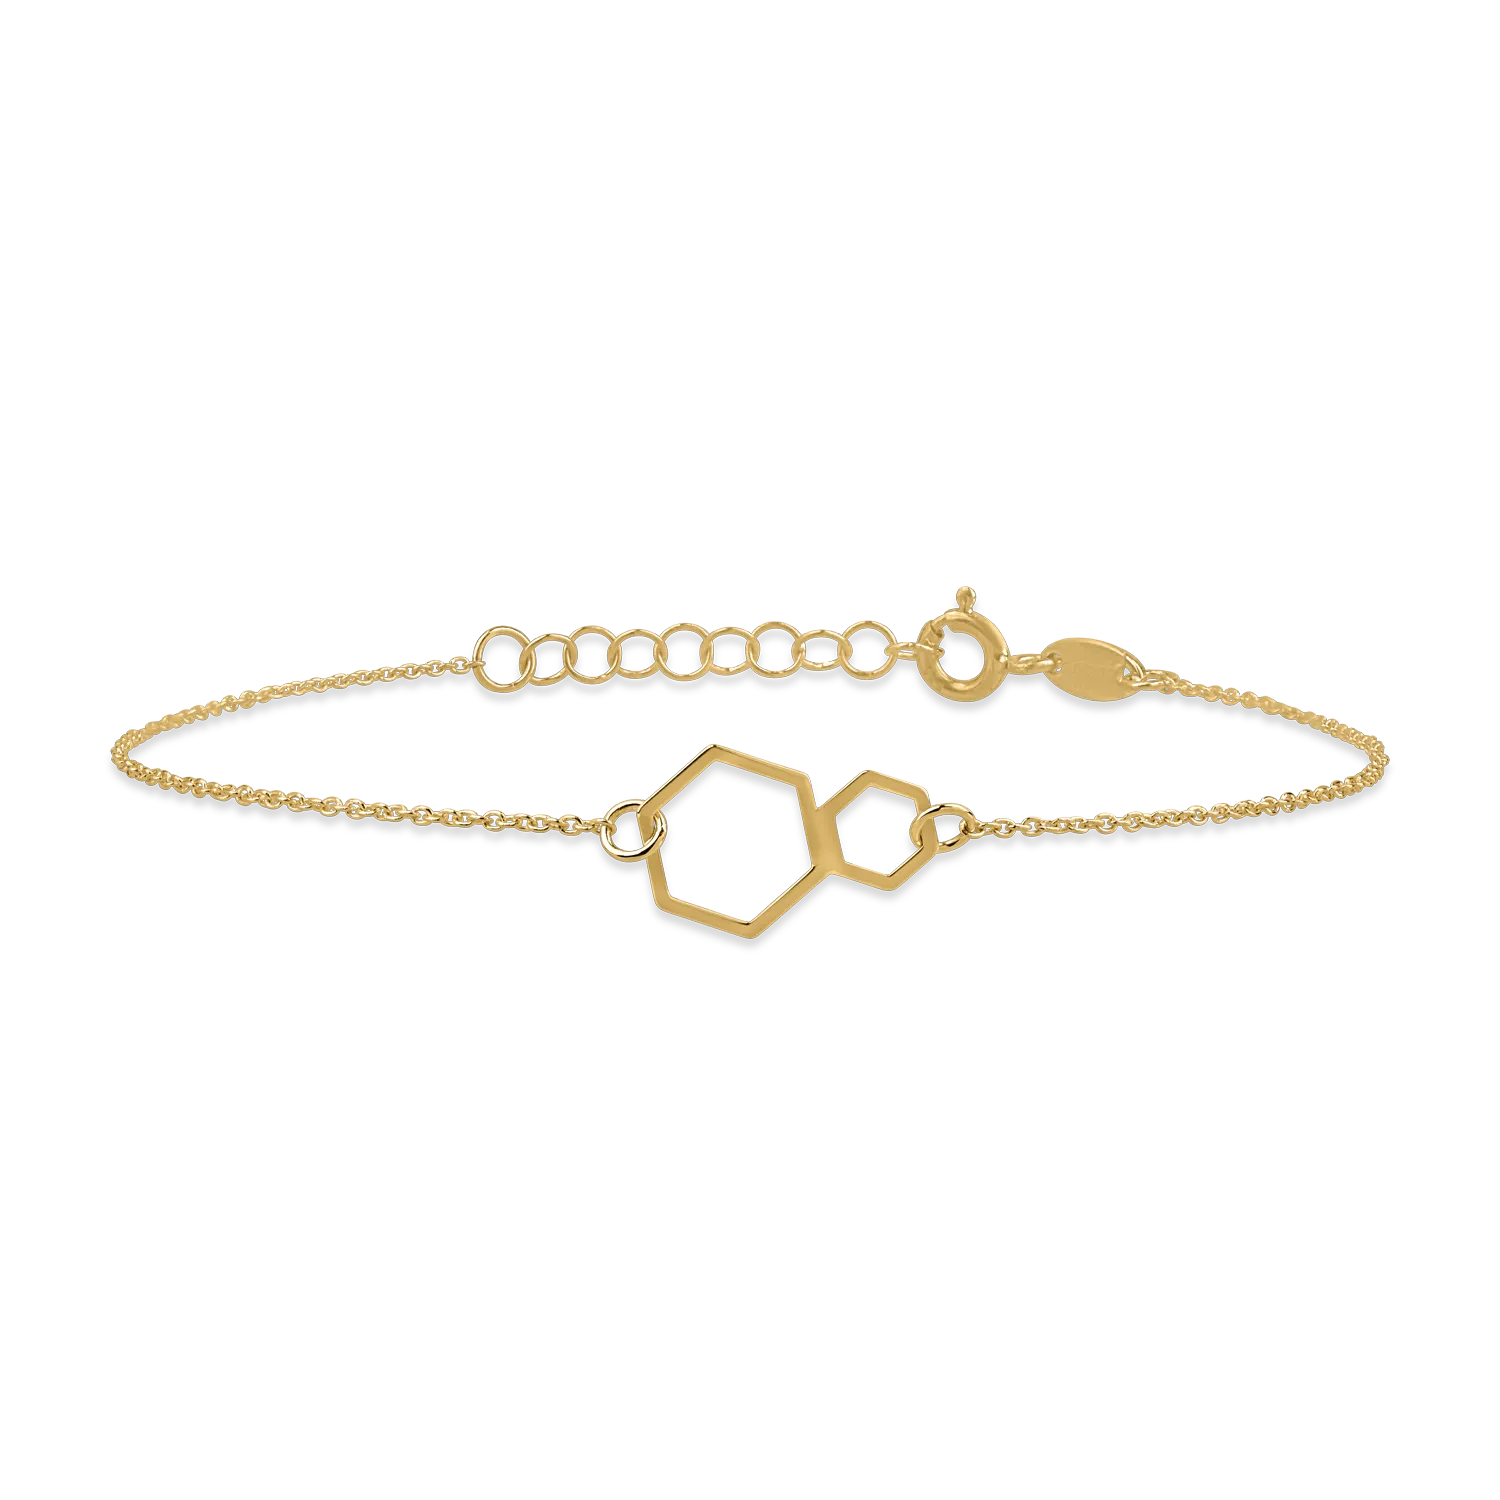 Yellow gold bracelet with hexagonal pendant